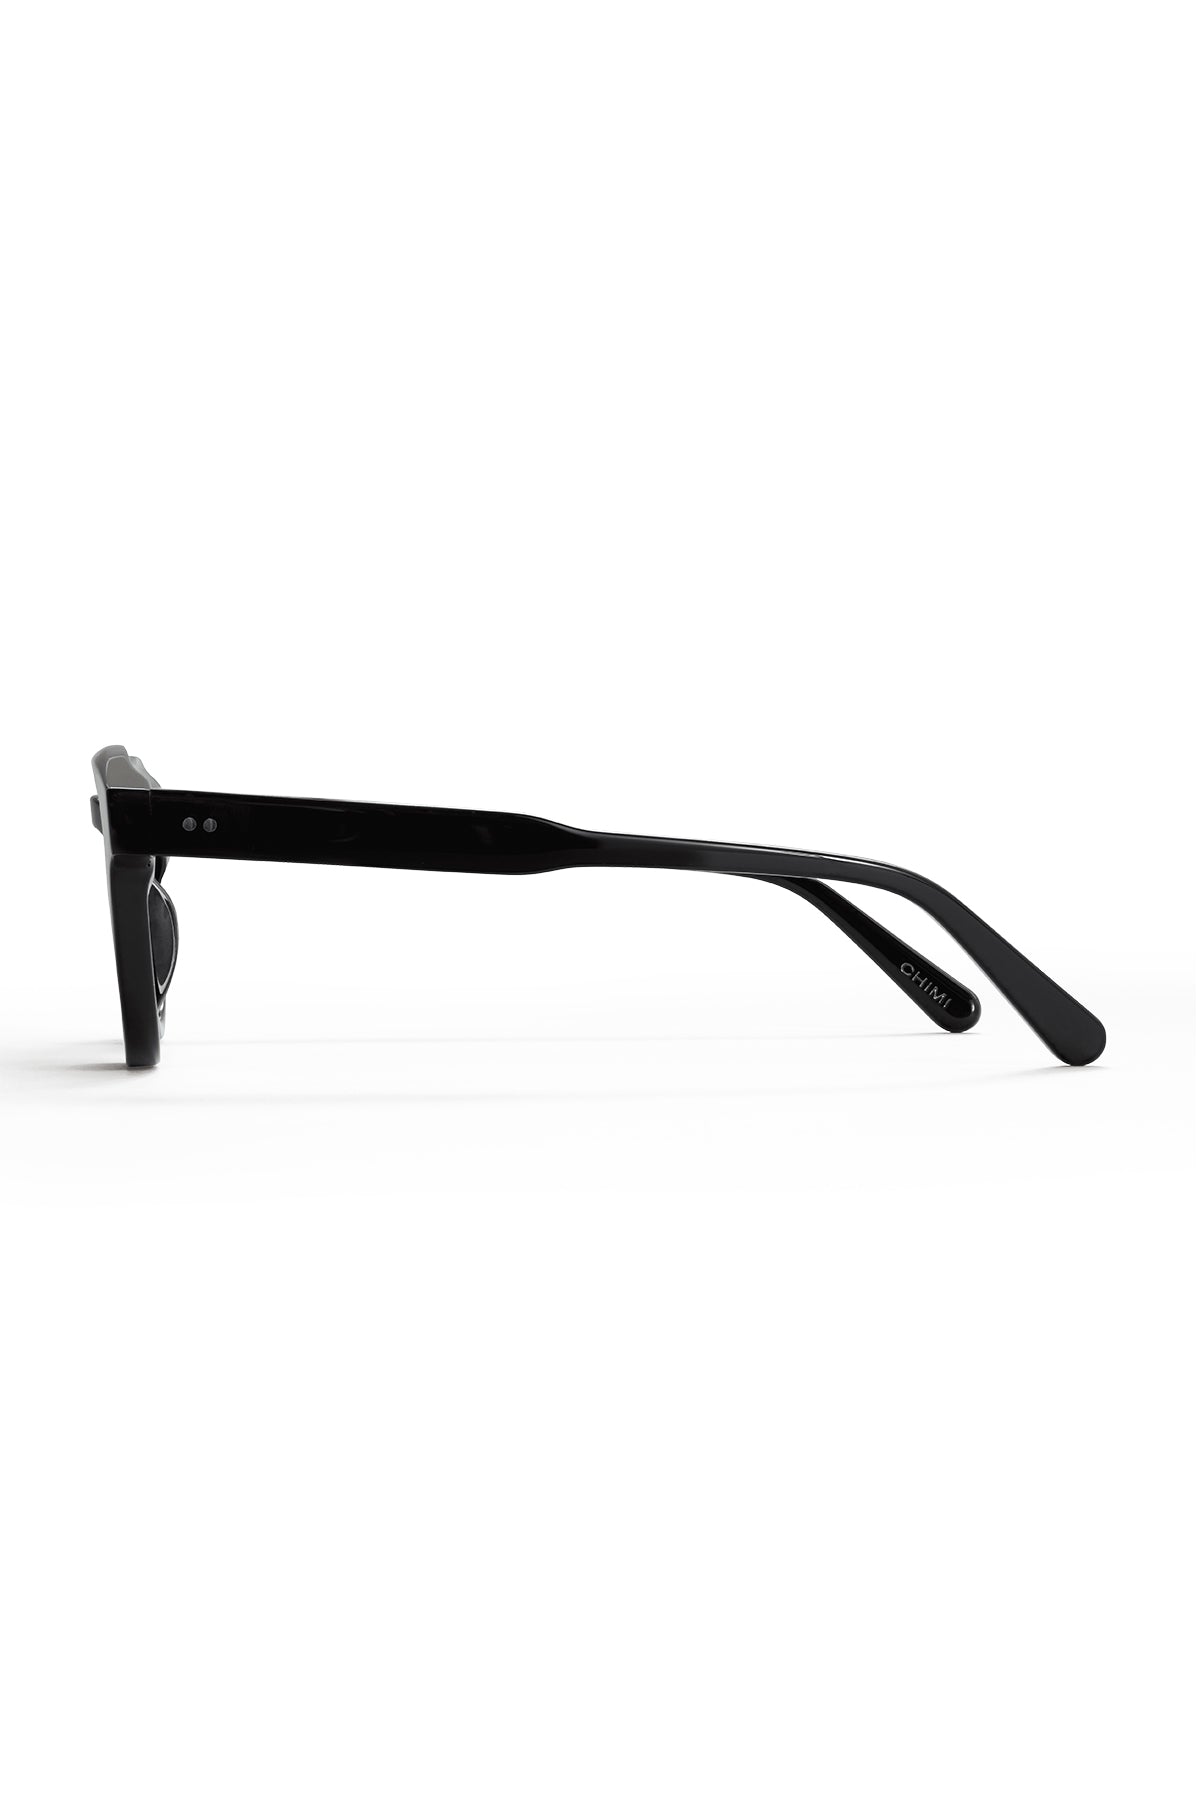   Chimi 01 Sunglasses Black Side 